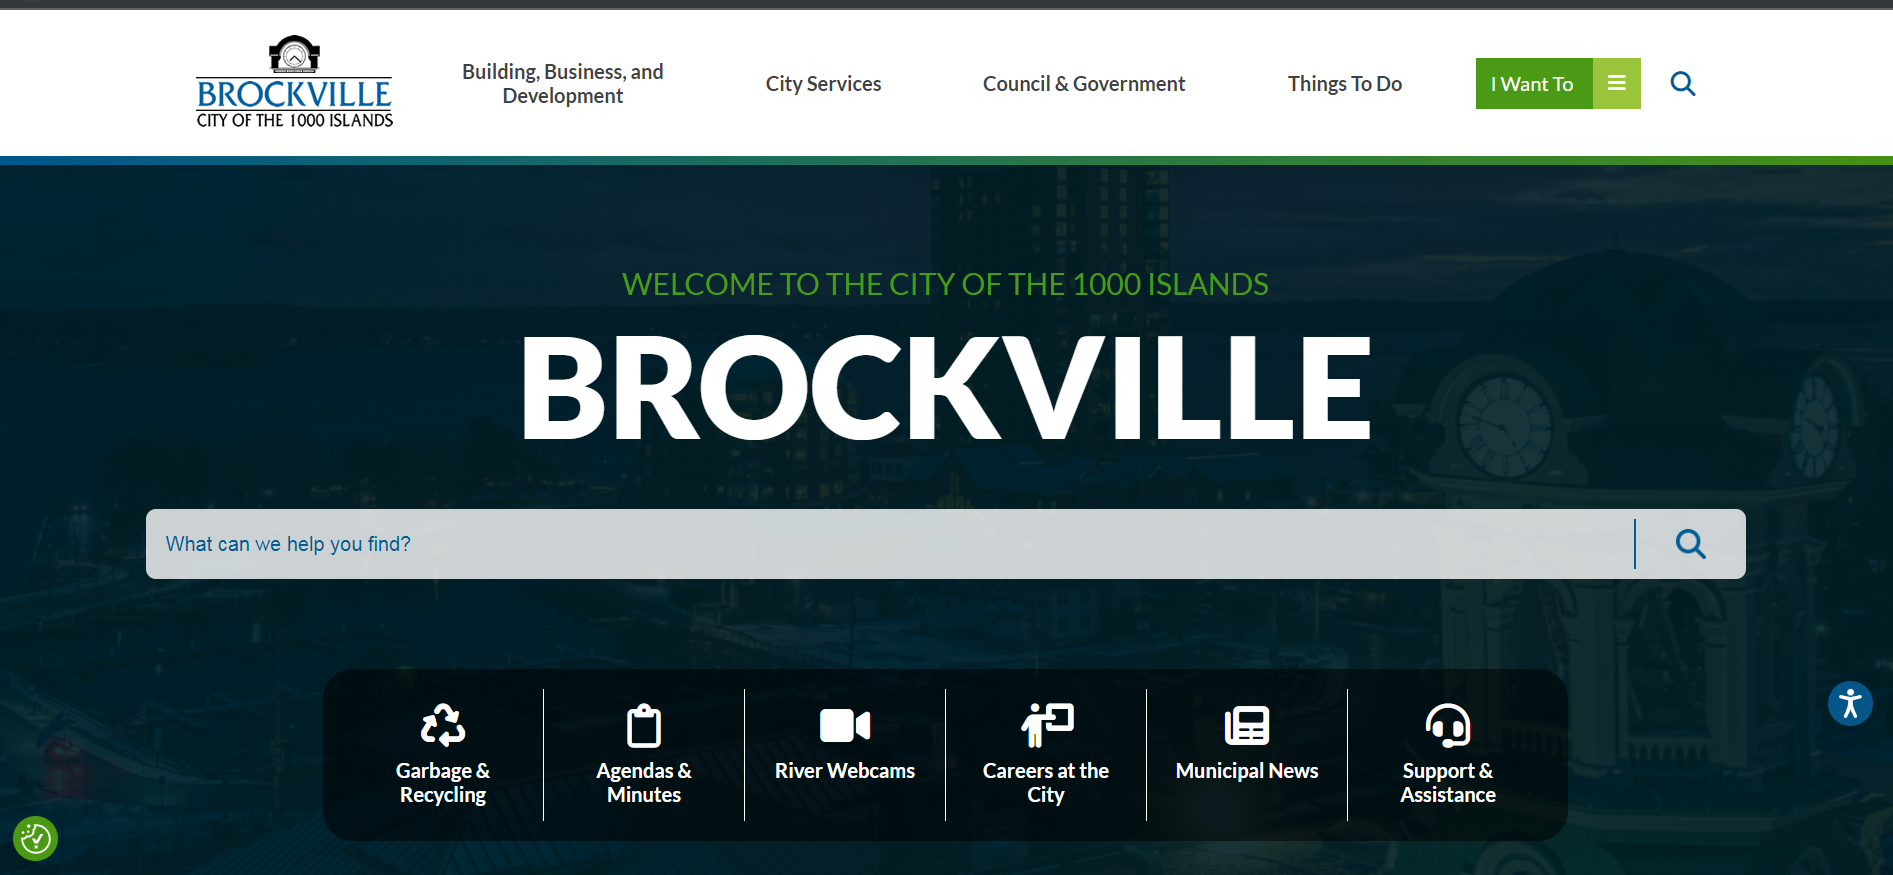 City of Brockville launches new Brockville.com